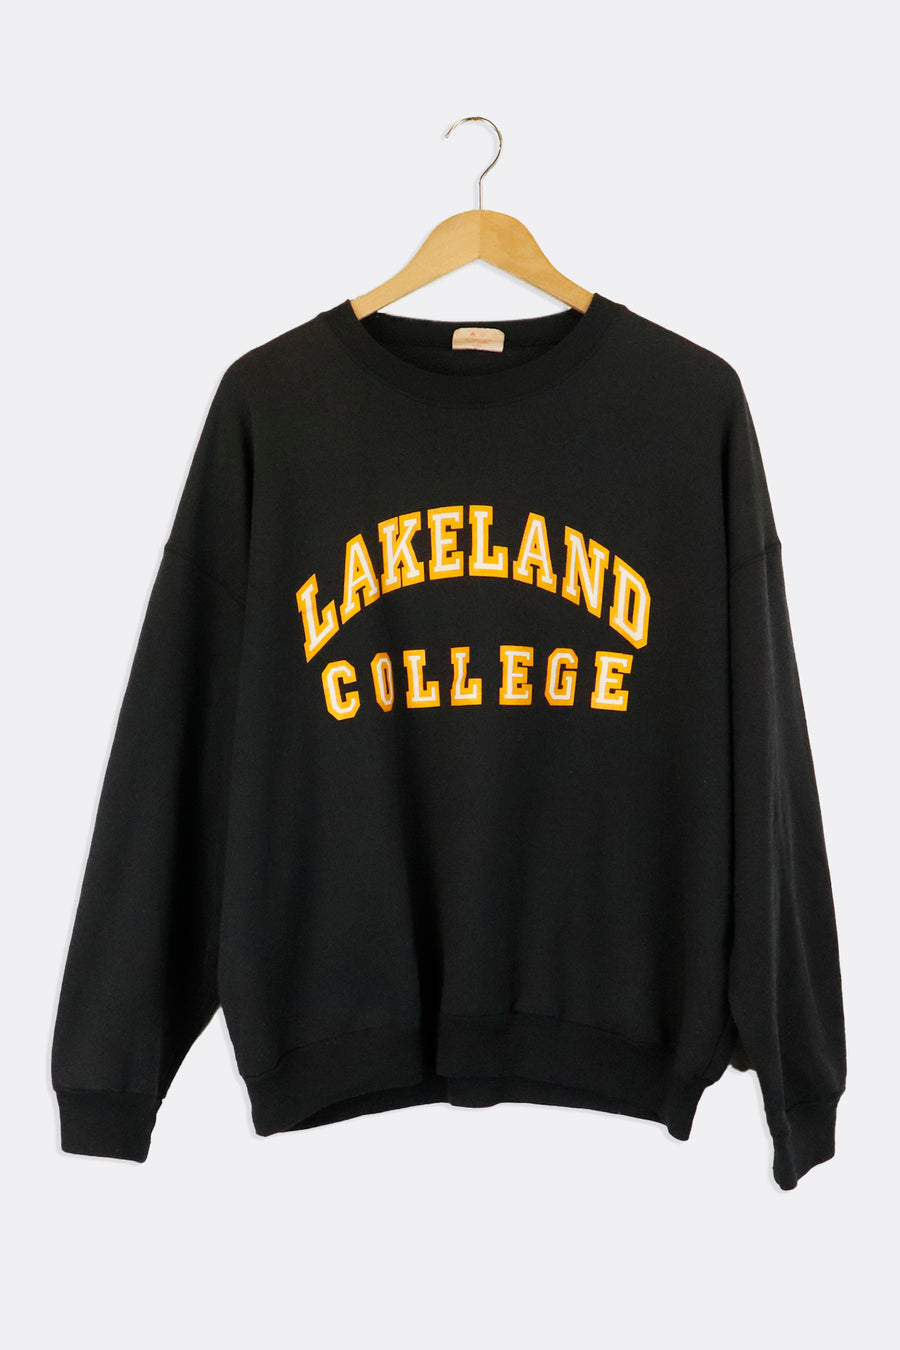 Vintage Lakeland College Simole Varsity Font Vinyl Sweatshirt Sz L